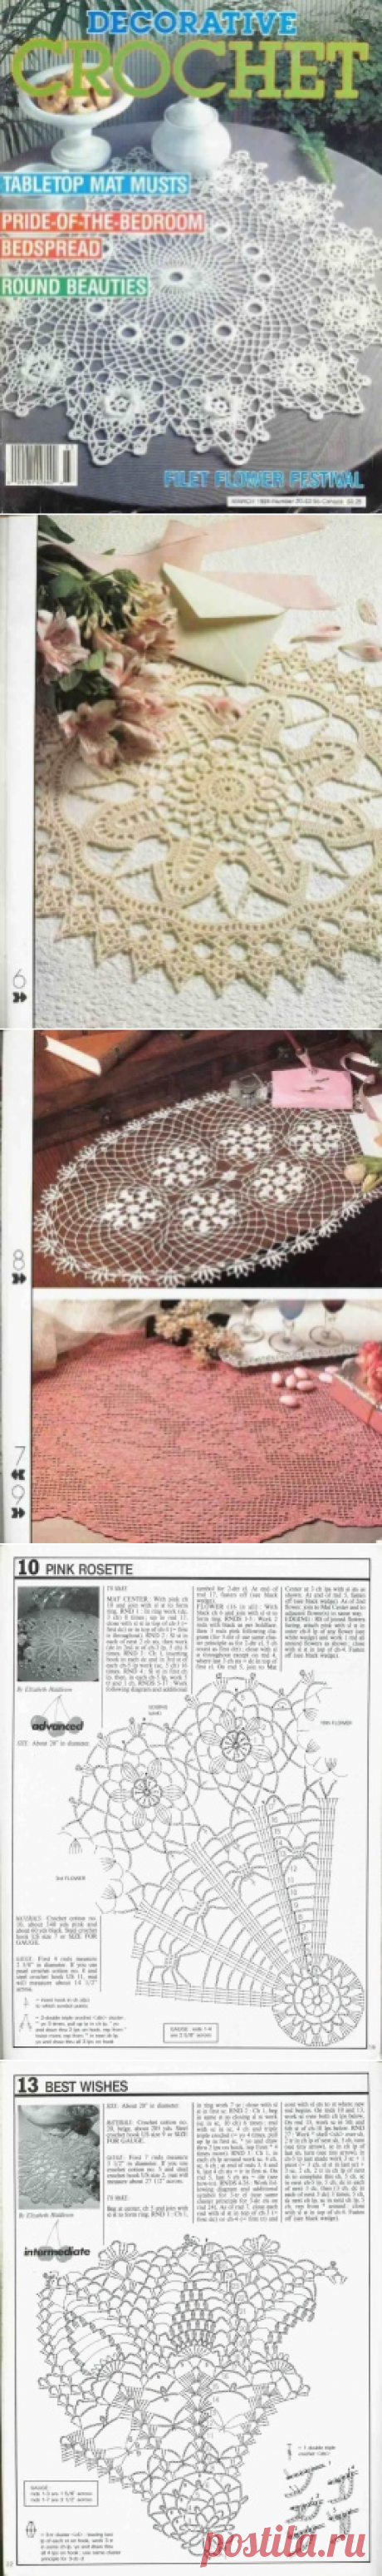 Журнал Decorative Crochet №20 1991